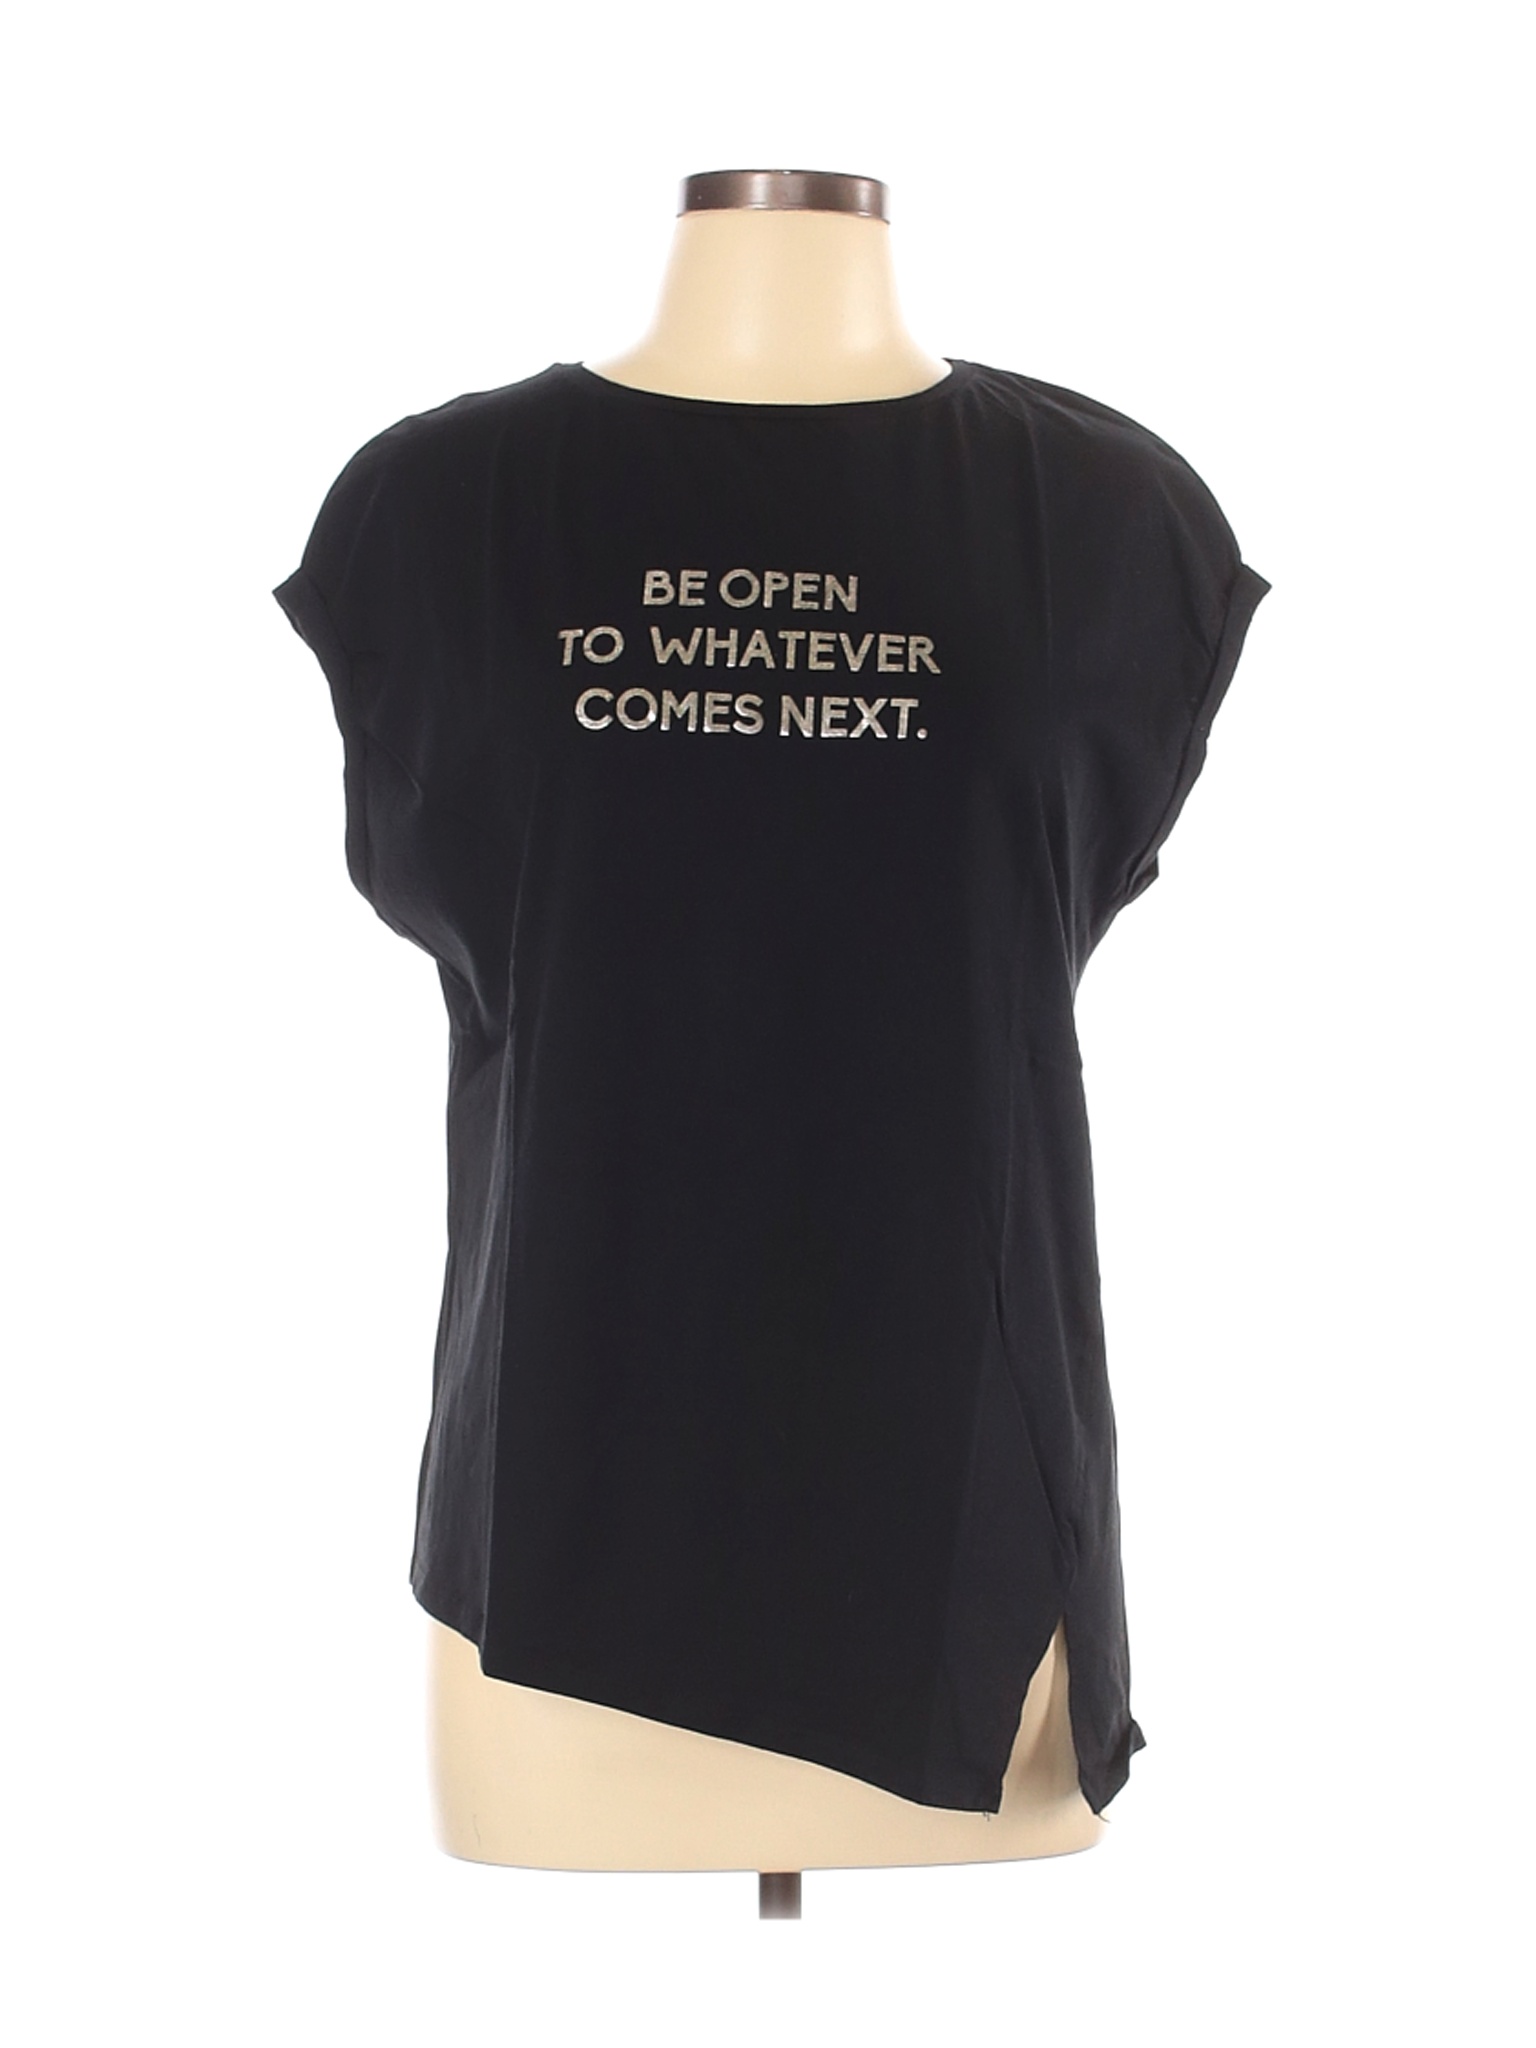 Zara W&B Collection Women Black Short Sleeve T-Shirt L | eBay